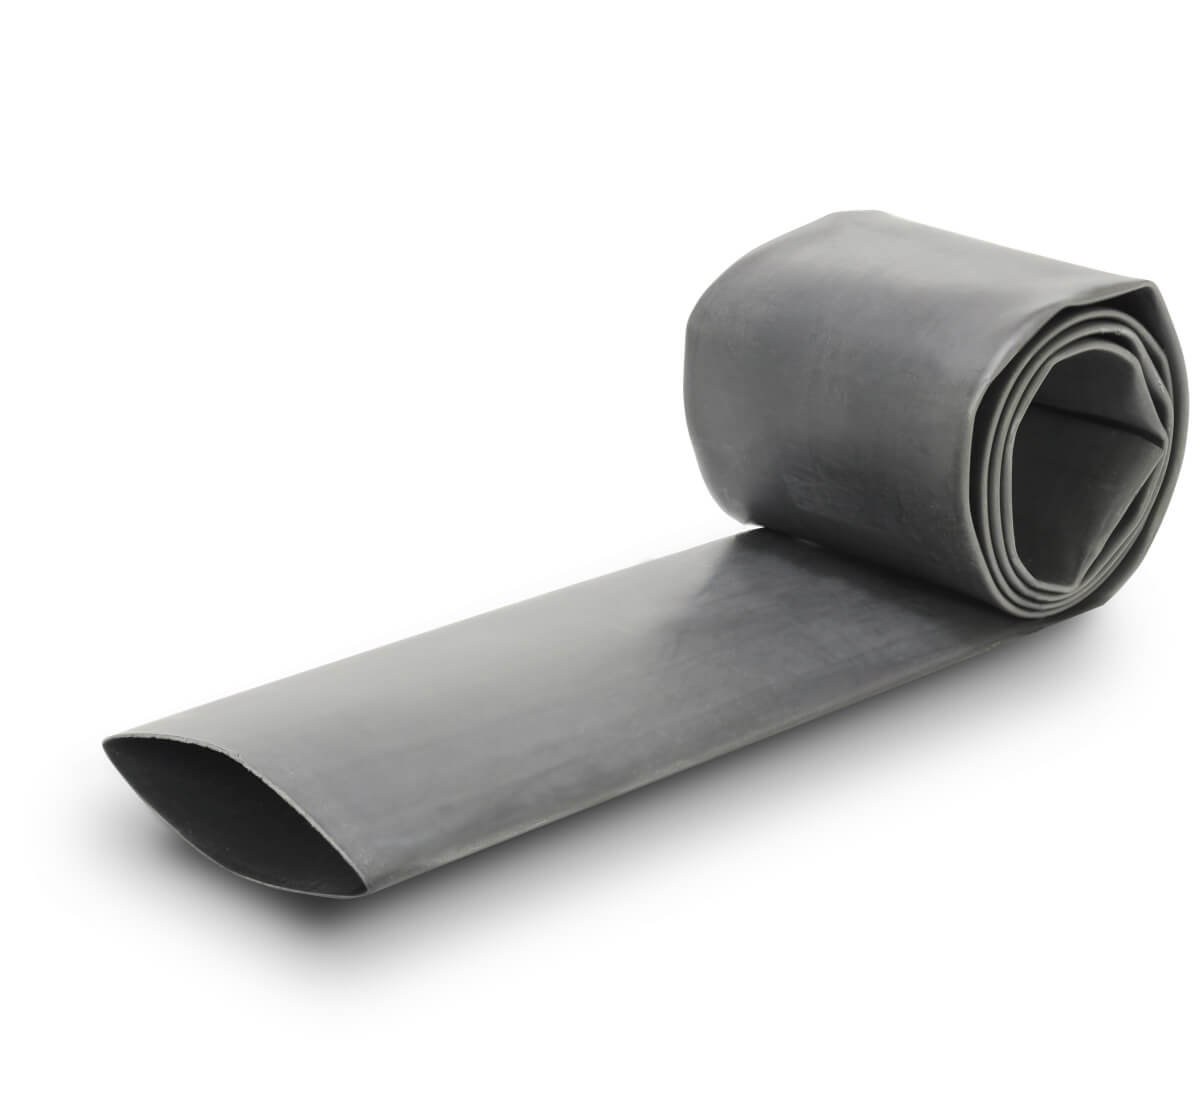 Heat-shrink tubing 2:1 Ø09mm Grey (1m)